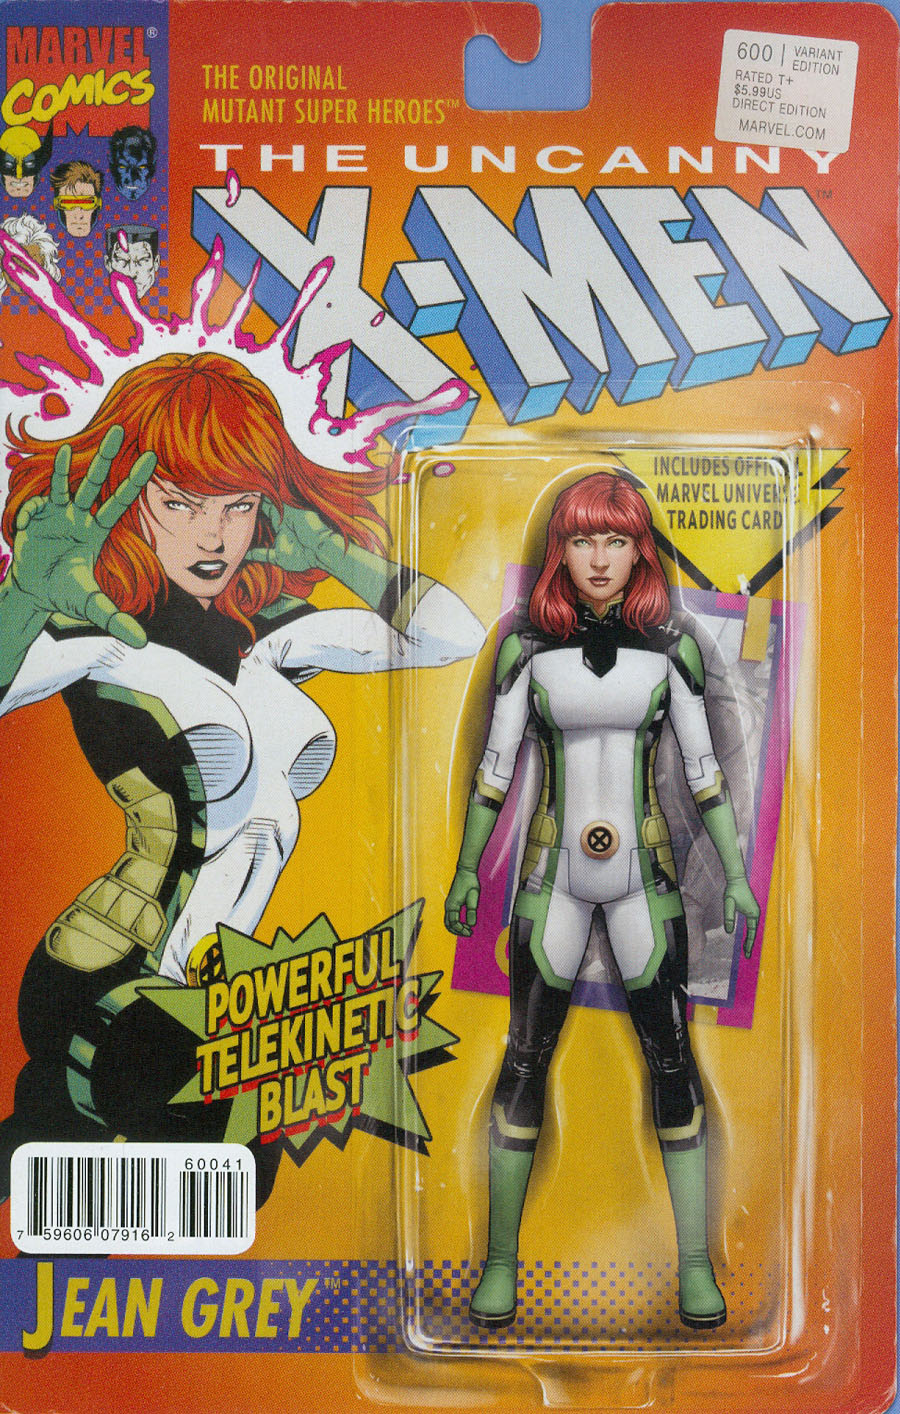 Uncanny X-Men Vol 3 #600 Cover B Variant John Tyler Christopher Action Figure A Cover